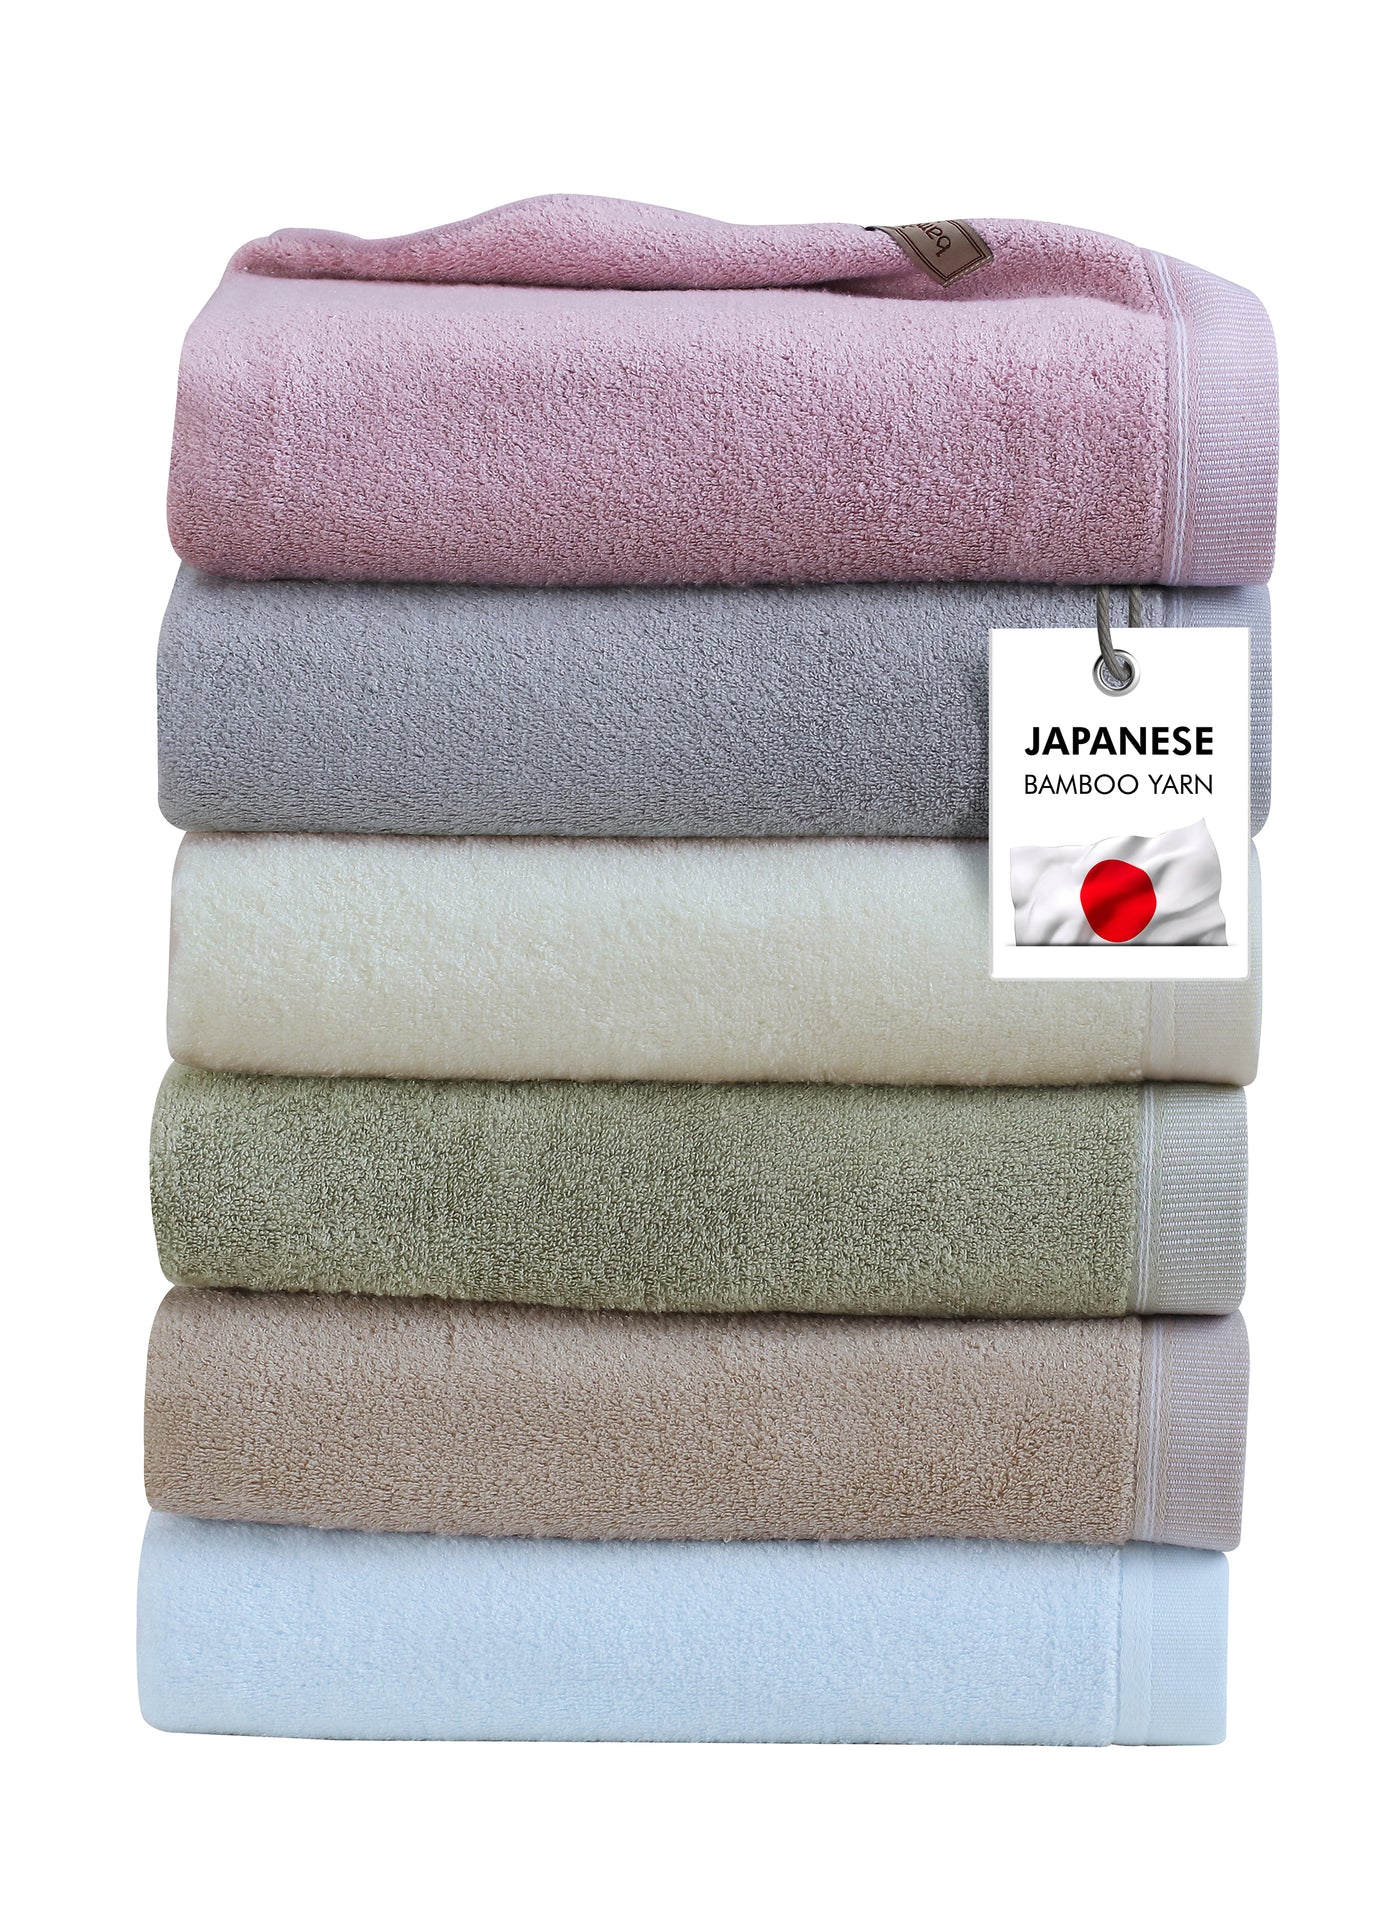 Bamboo Bath Towels - High Absorbent & Super Soft 360 GSM